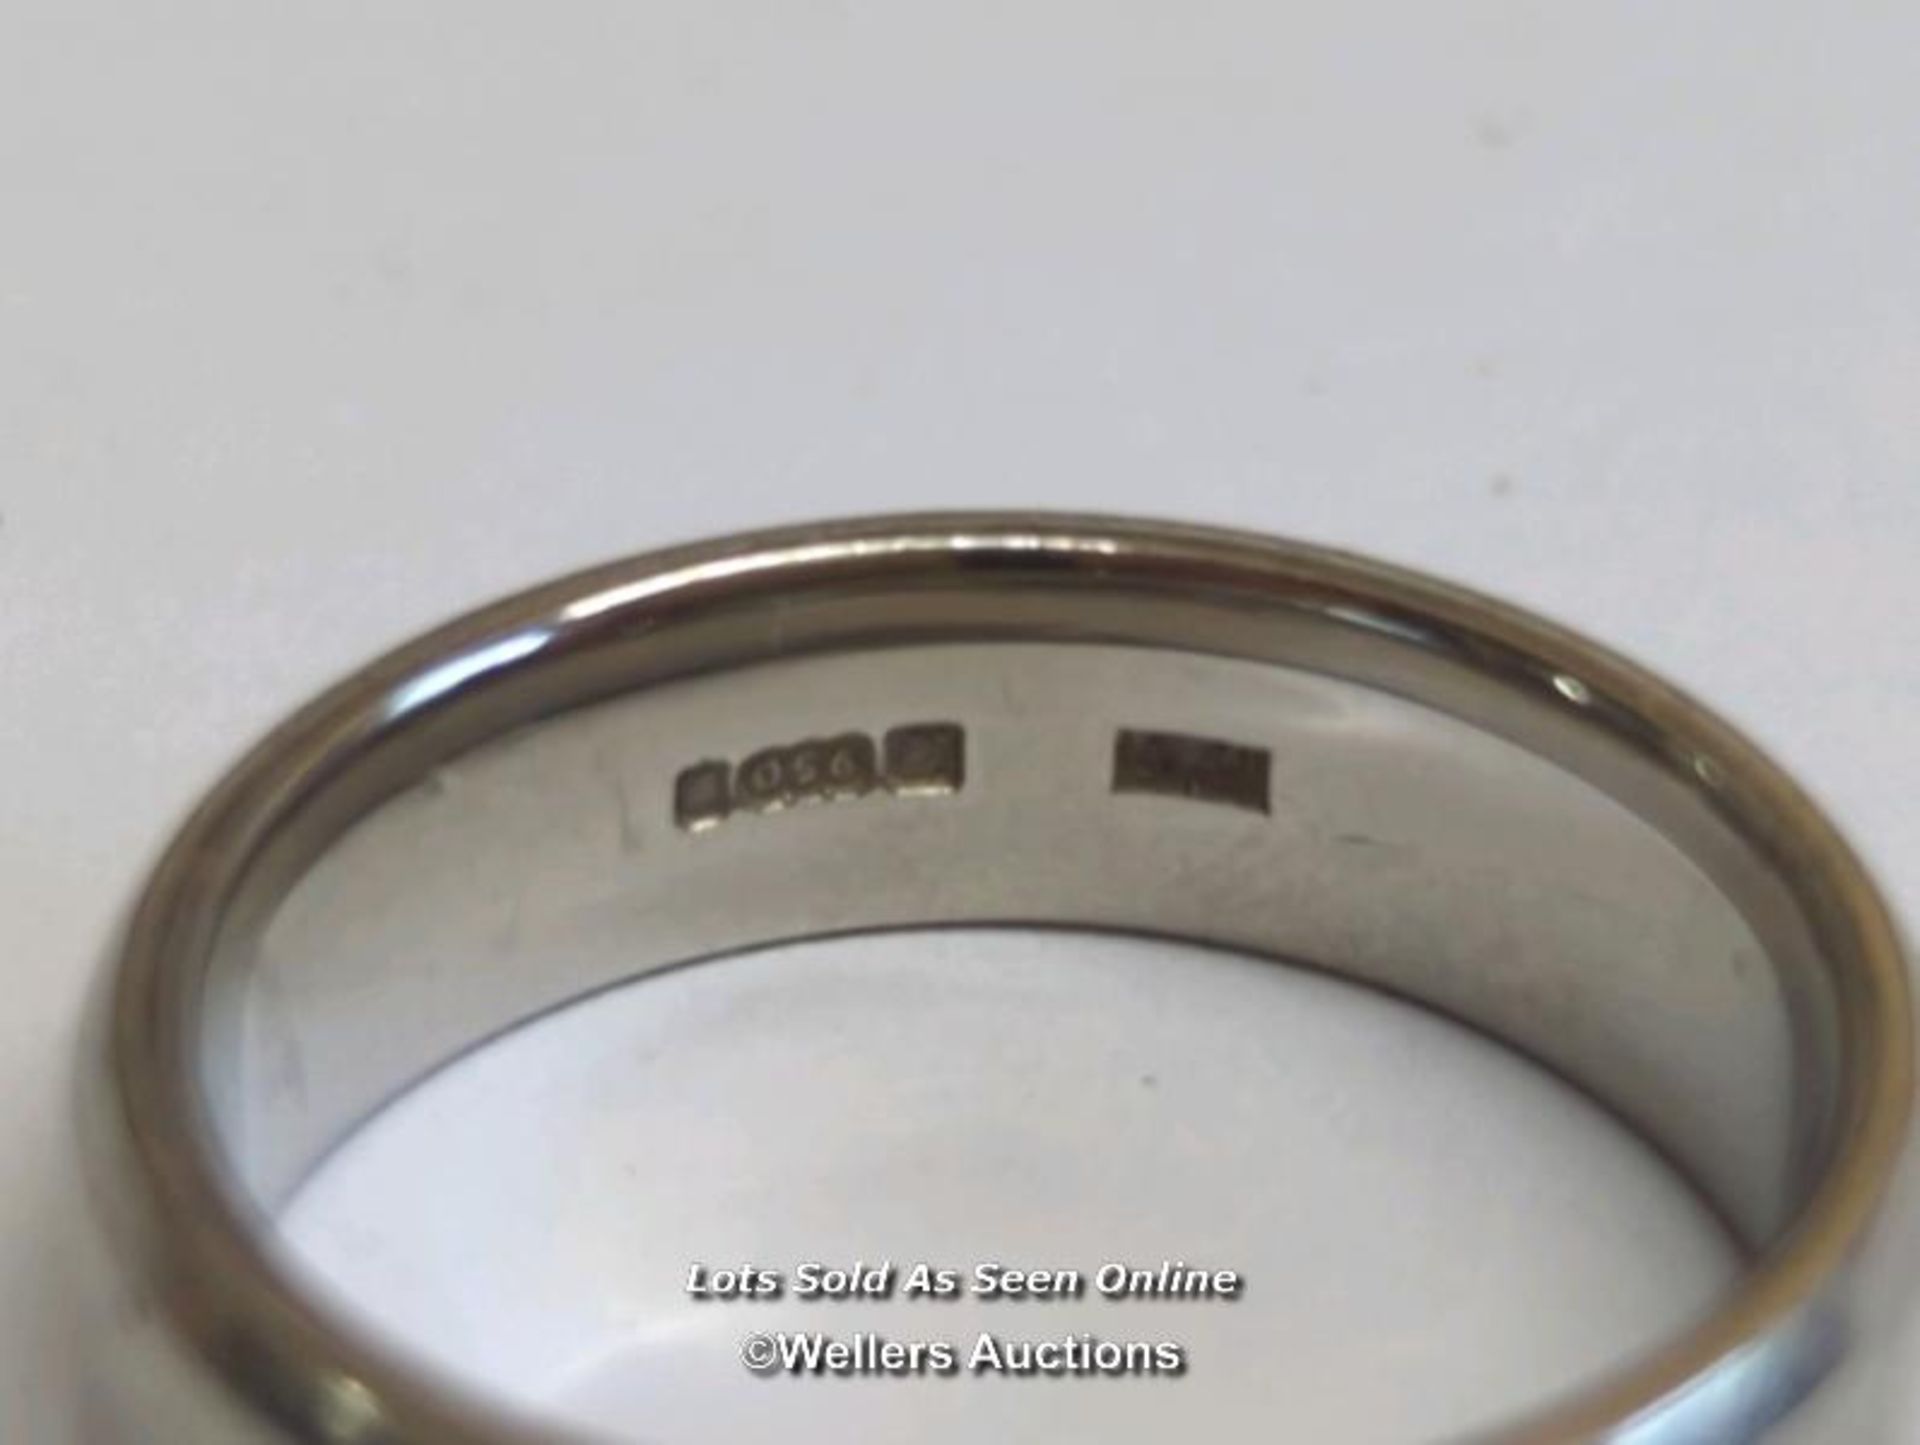 Palladium wedding ring, size Q, width 6mm, gross weight 7.35g / SF - Image 2 of 3